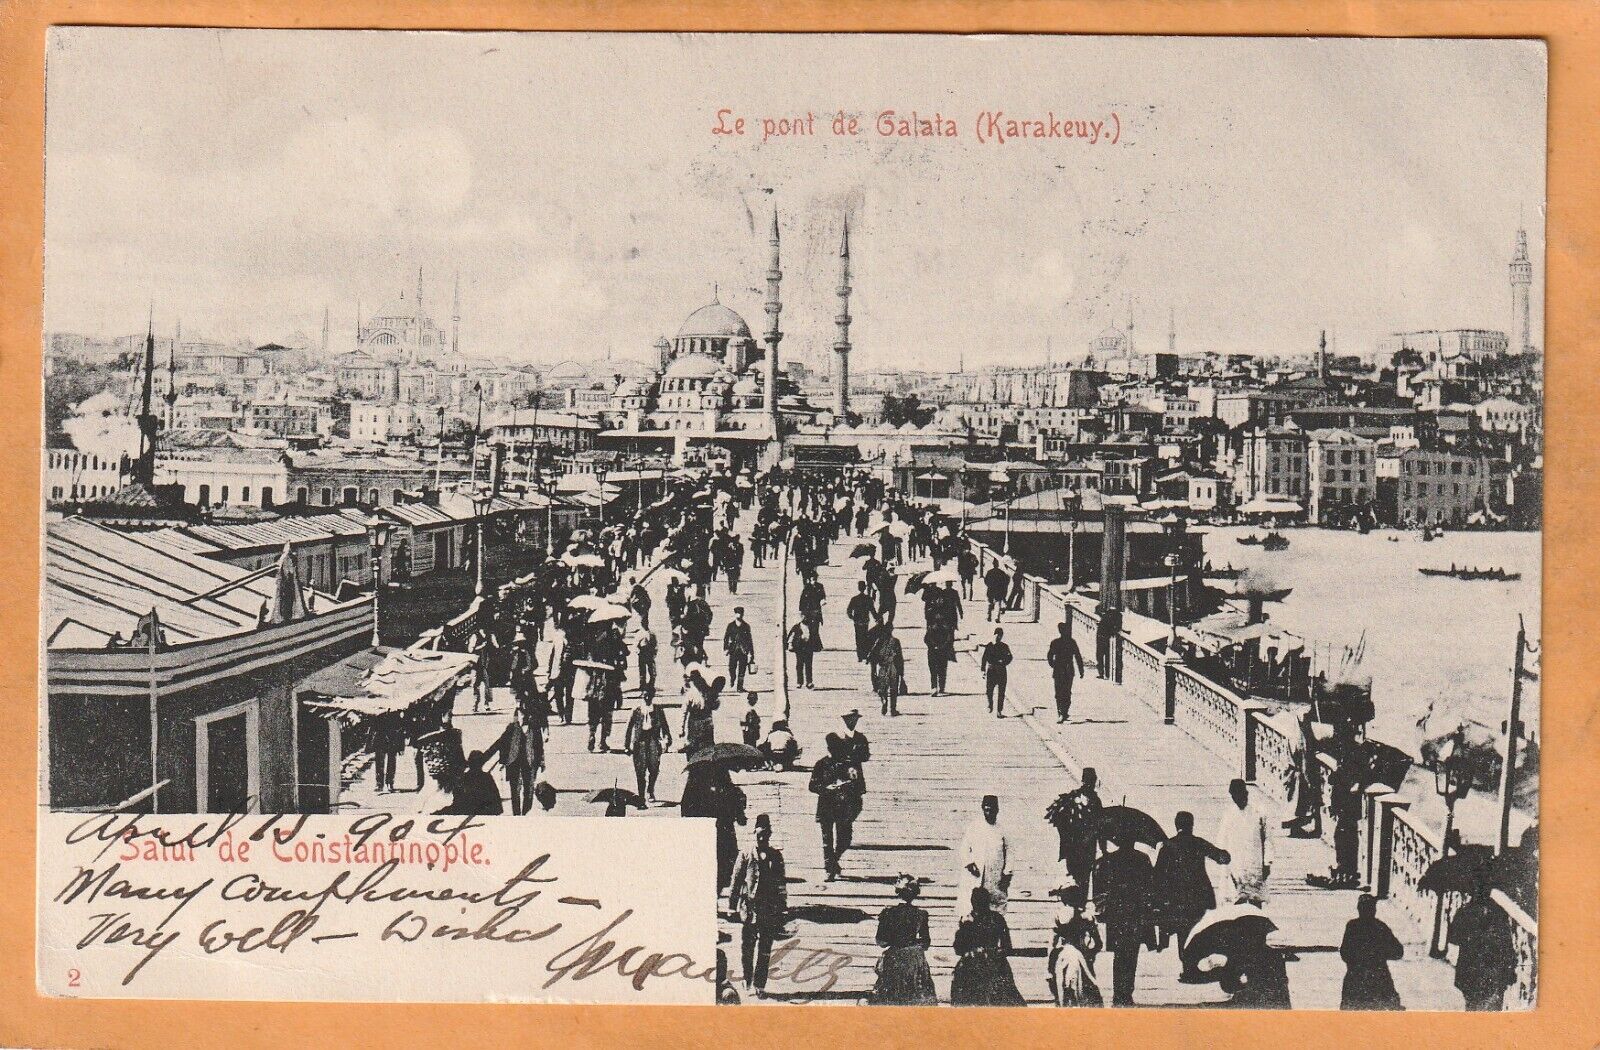 Salut de Constantinople Istanbul Turkey 1904 Postcard Mailed German PO